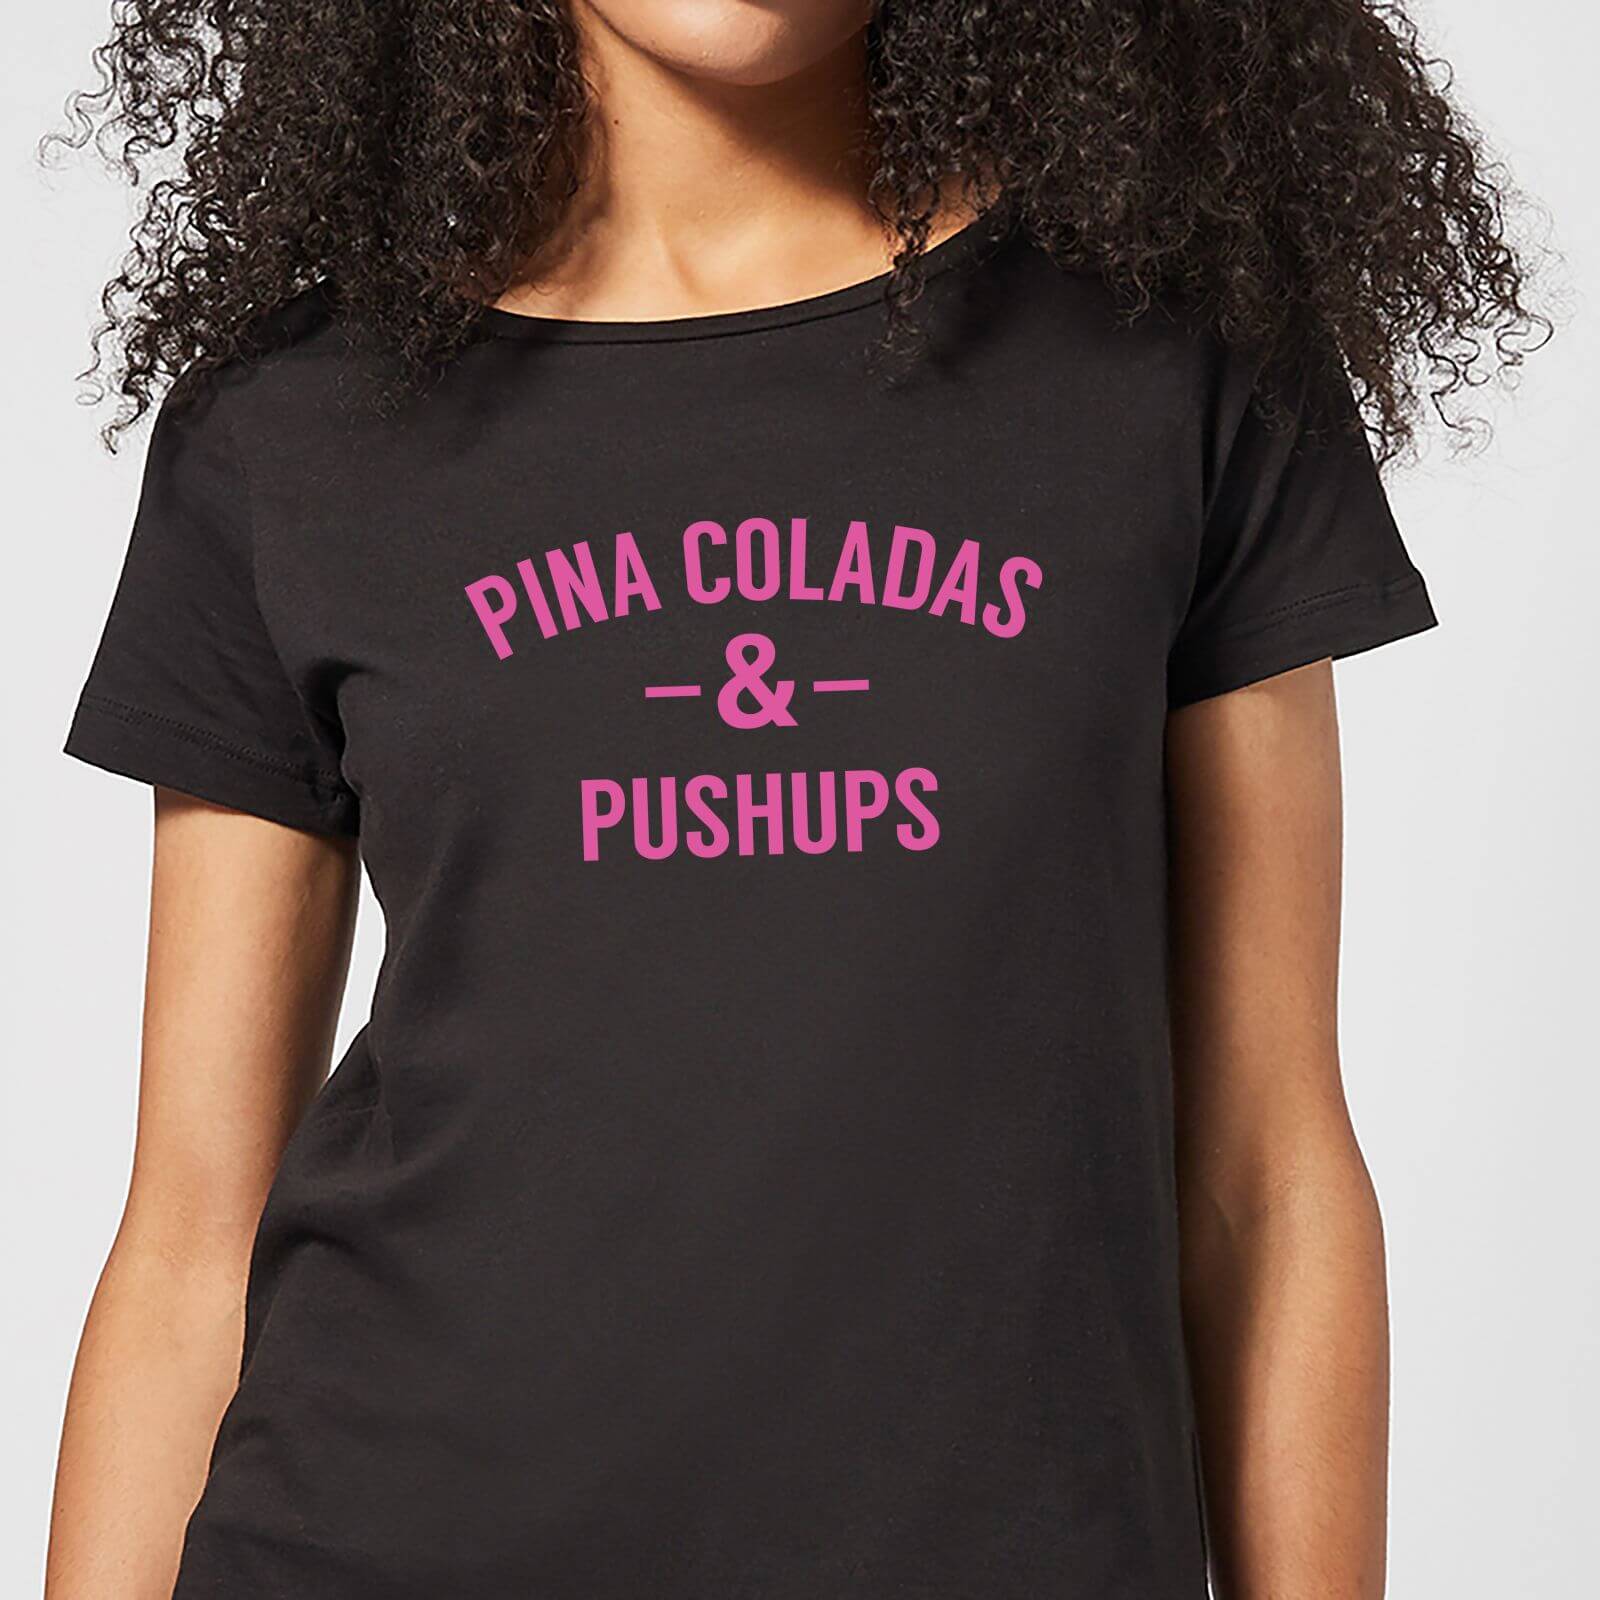 Pina Coladas and Pushups Women's T-Shirt - Black - 3XL - Black